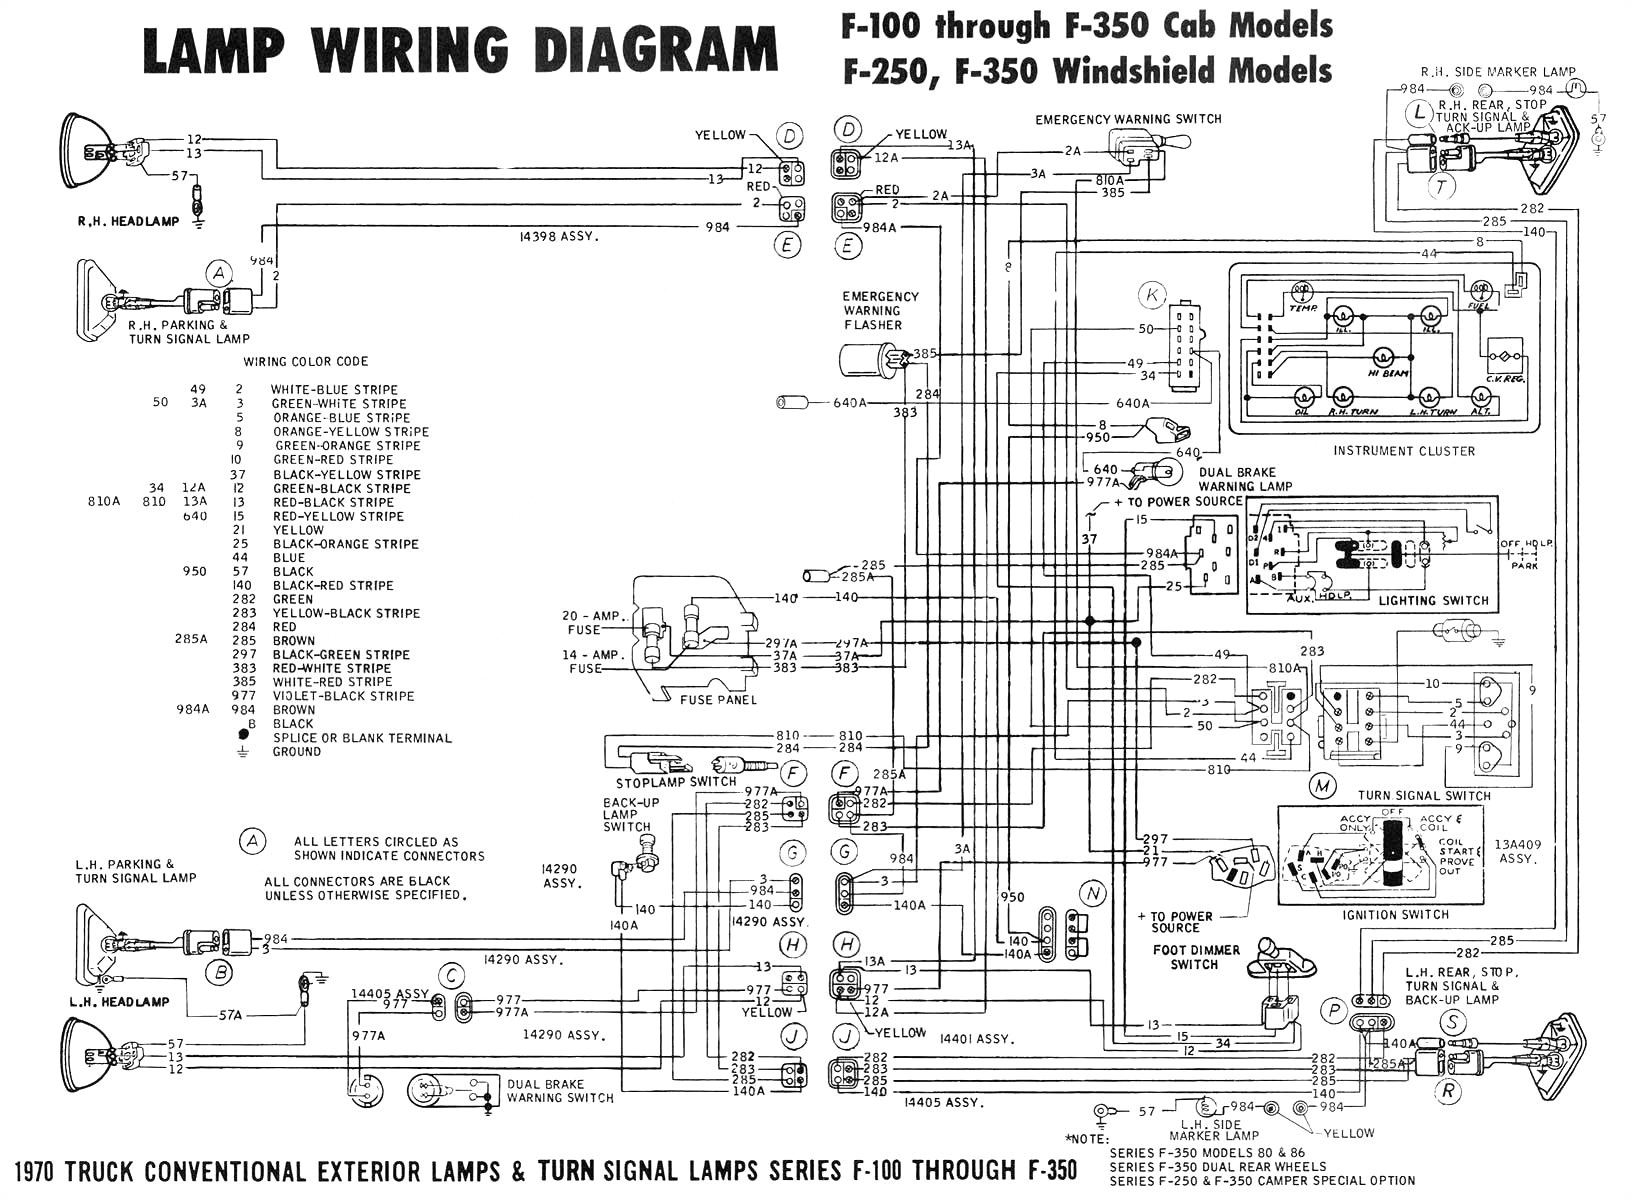 2pac oem wiring diagram wiring diagram option 2pac oem wiring diagram